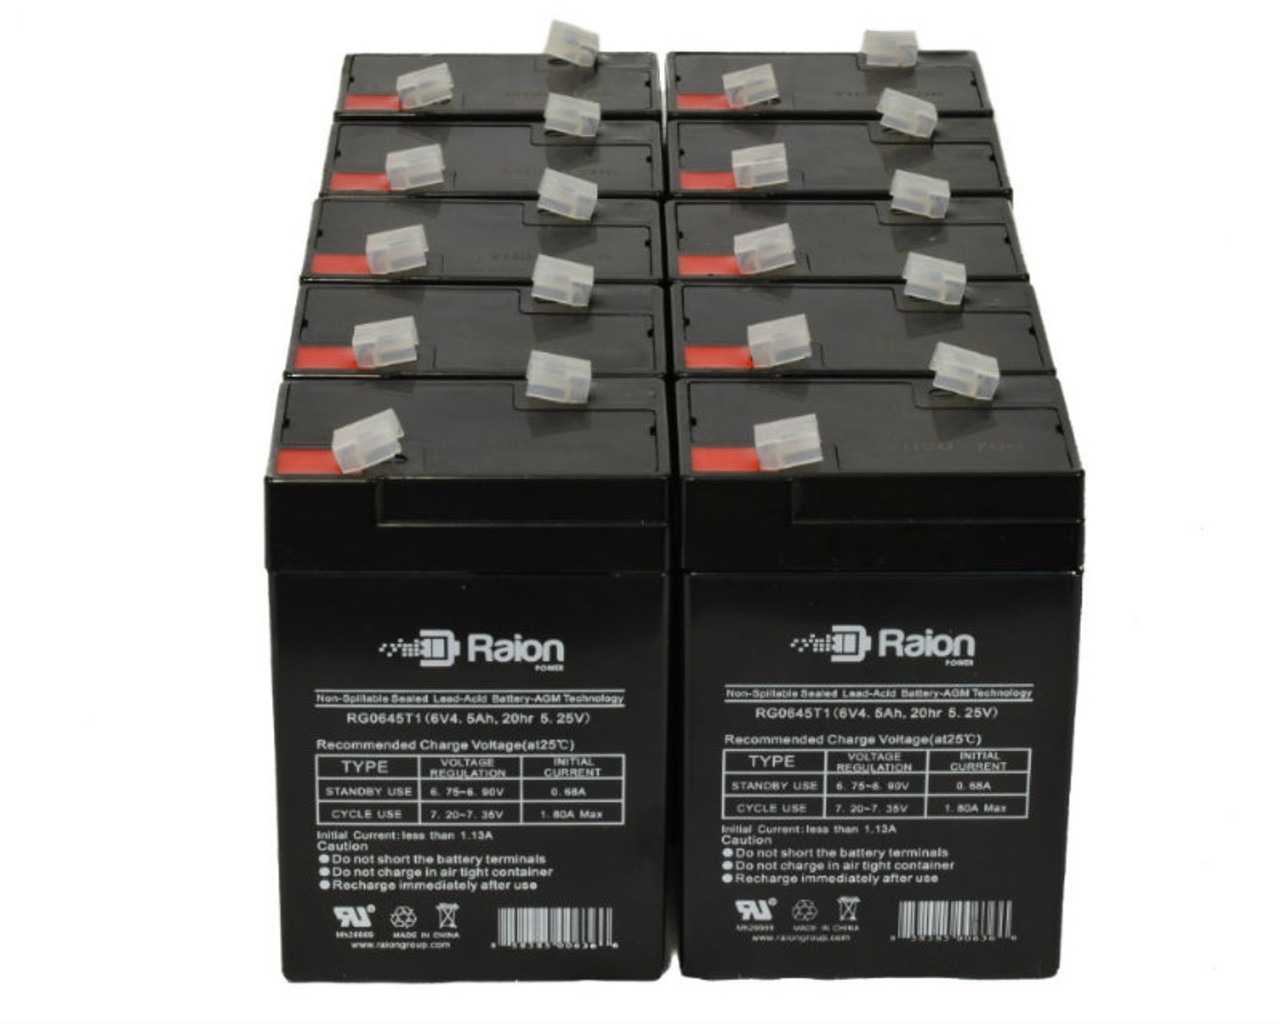 Raion Power 6V 4.5Ah Replacement Emergency Light Battery for Sure-Lites / Cooper Lighting SL-26-02 - 10 Pack